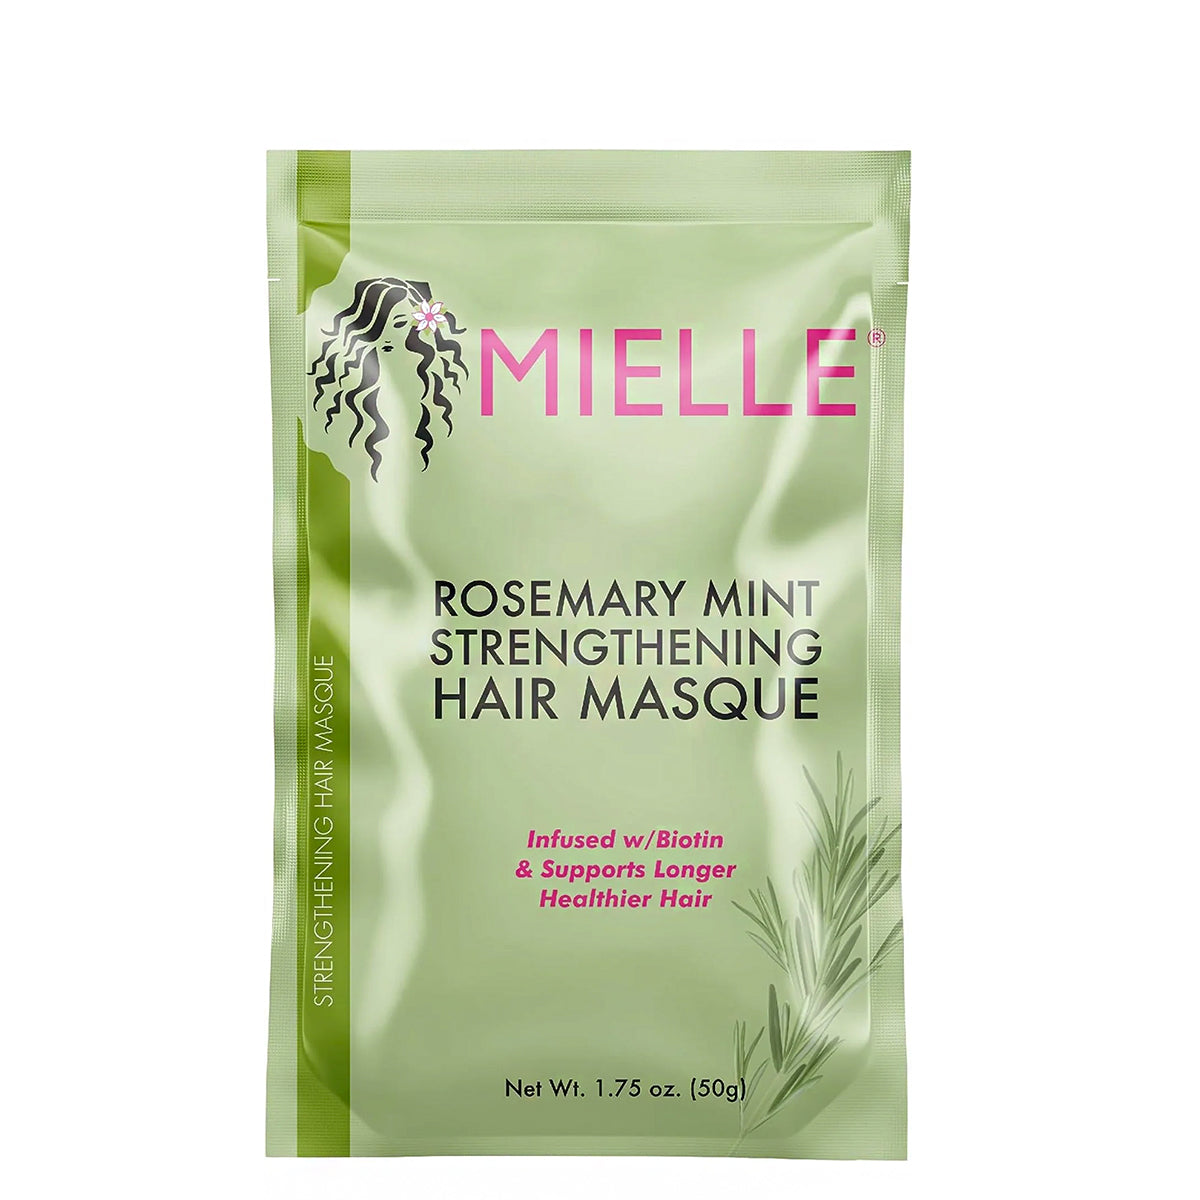 Mielle Rosemary Mint Strengthening Hair Masque 1.75oz